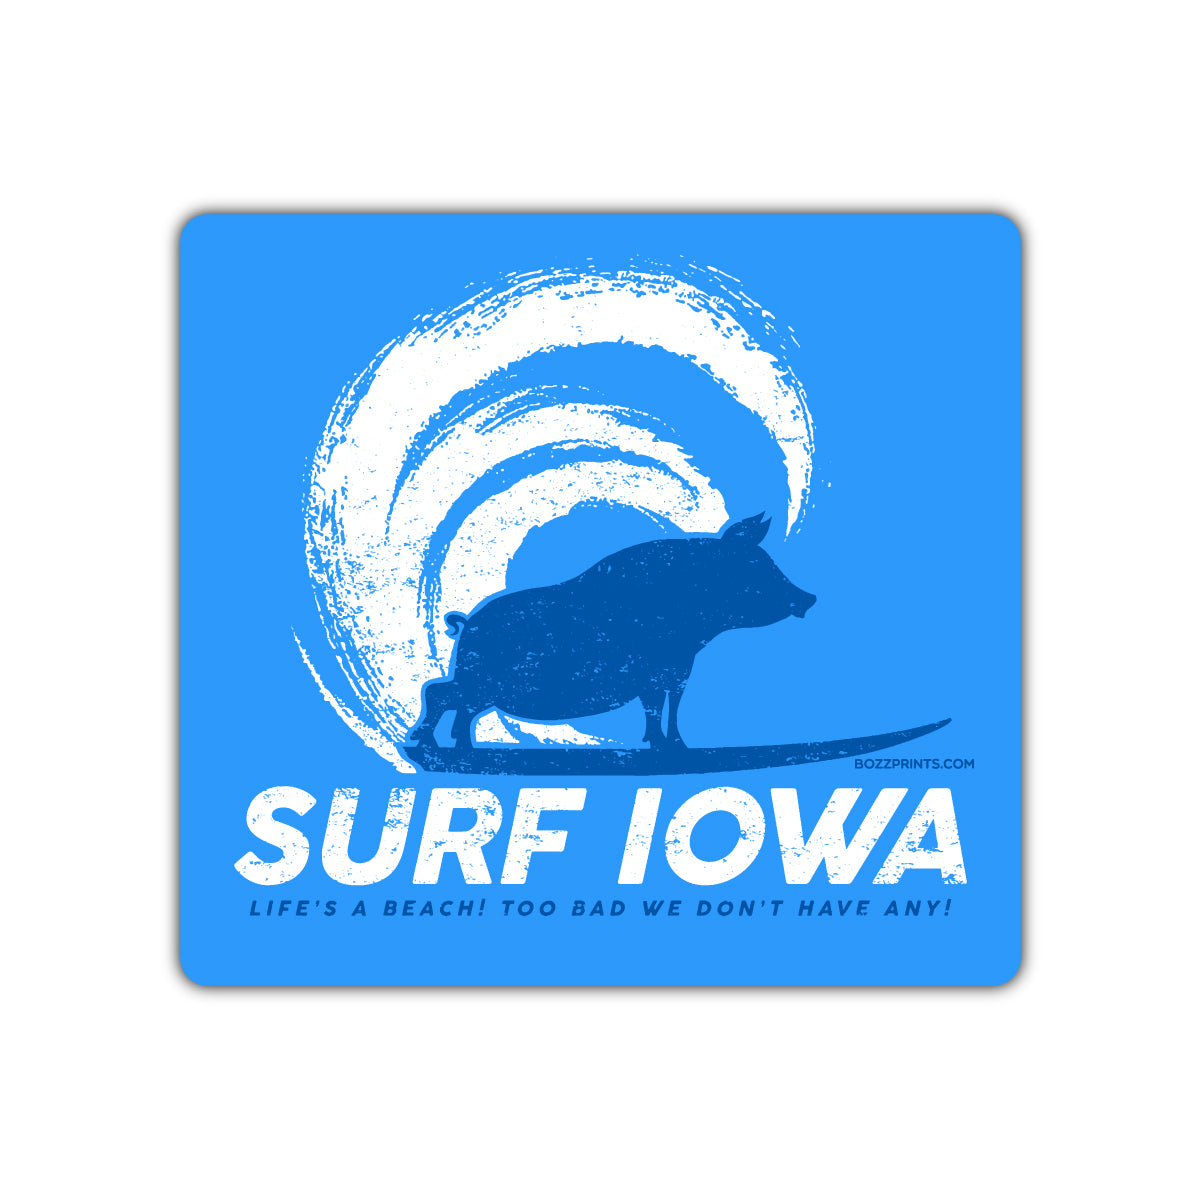 Surf Iowa - Bozz Prints